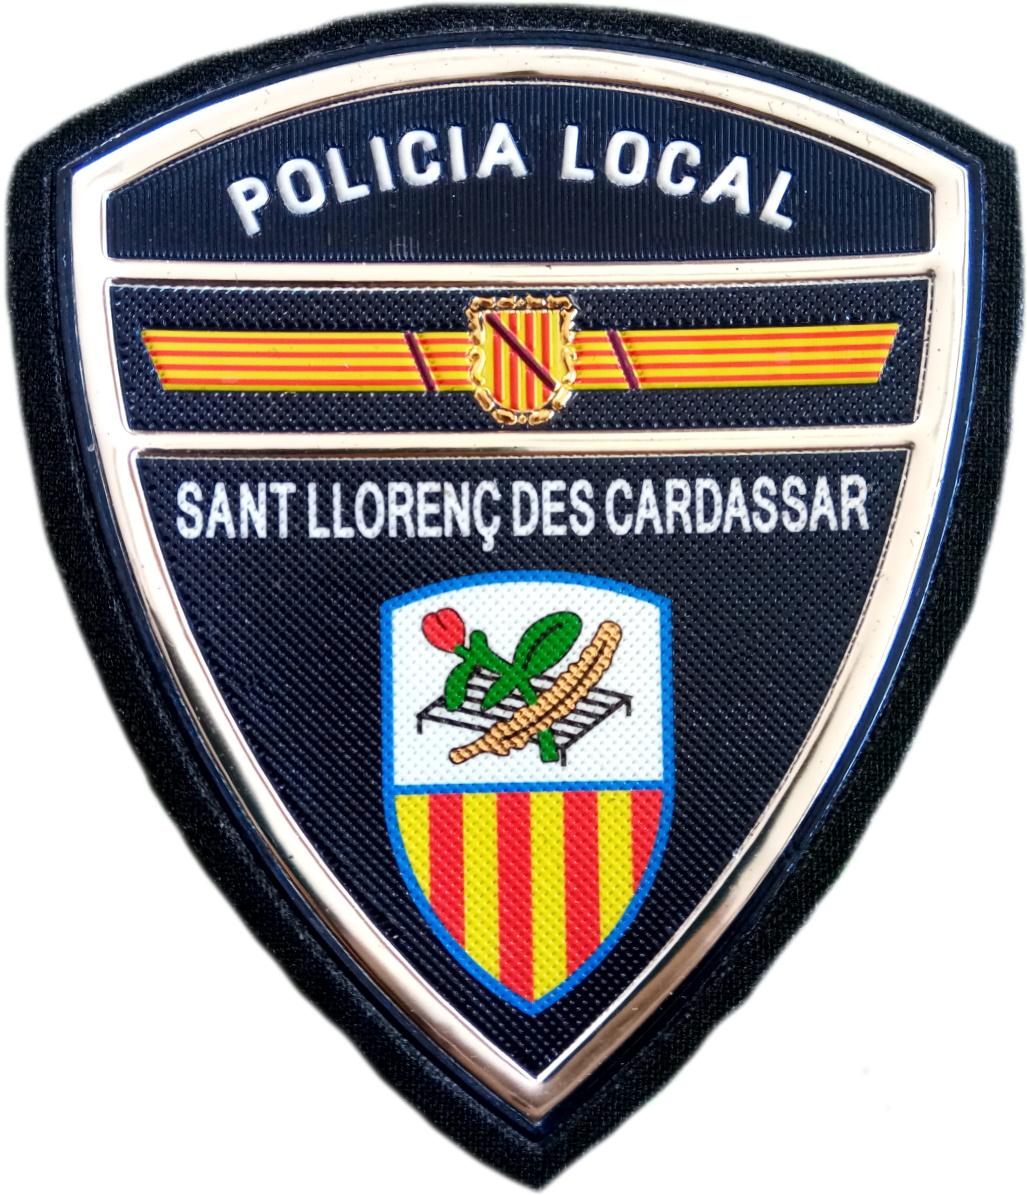 Policía Local Sant Llorenç des Cardassar parche insignia emblema distintivo